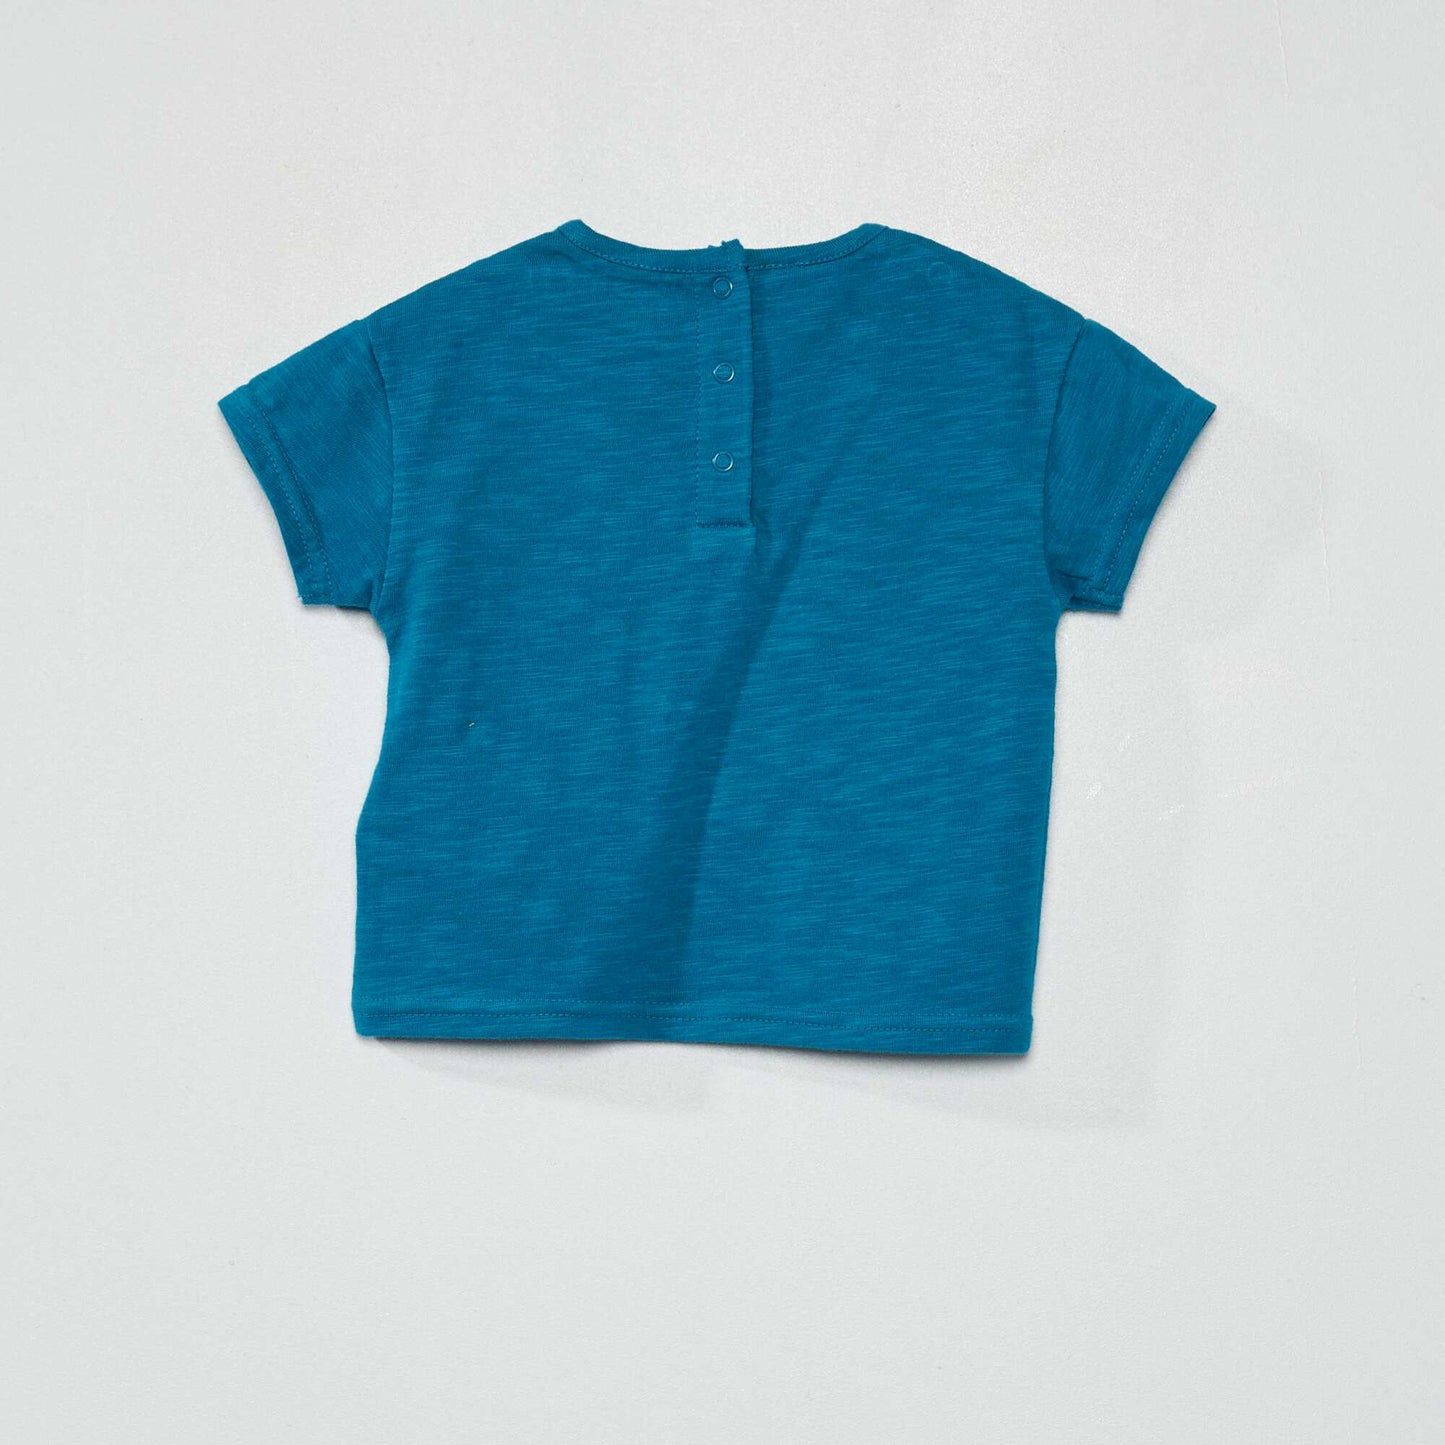 Ensemble salopette + t-shirt Bleu